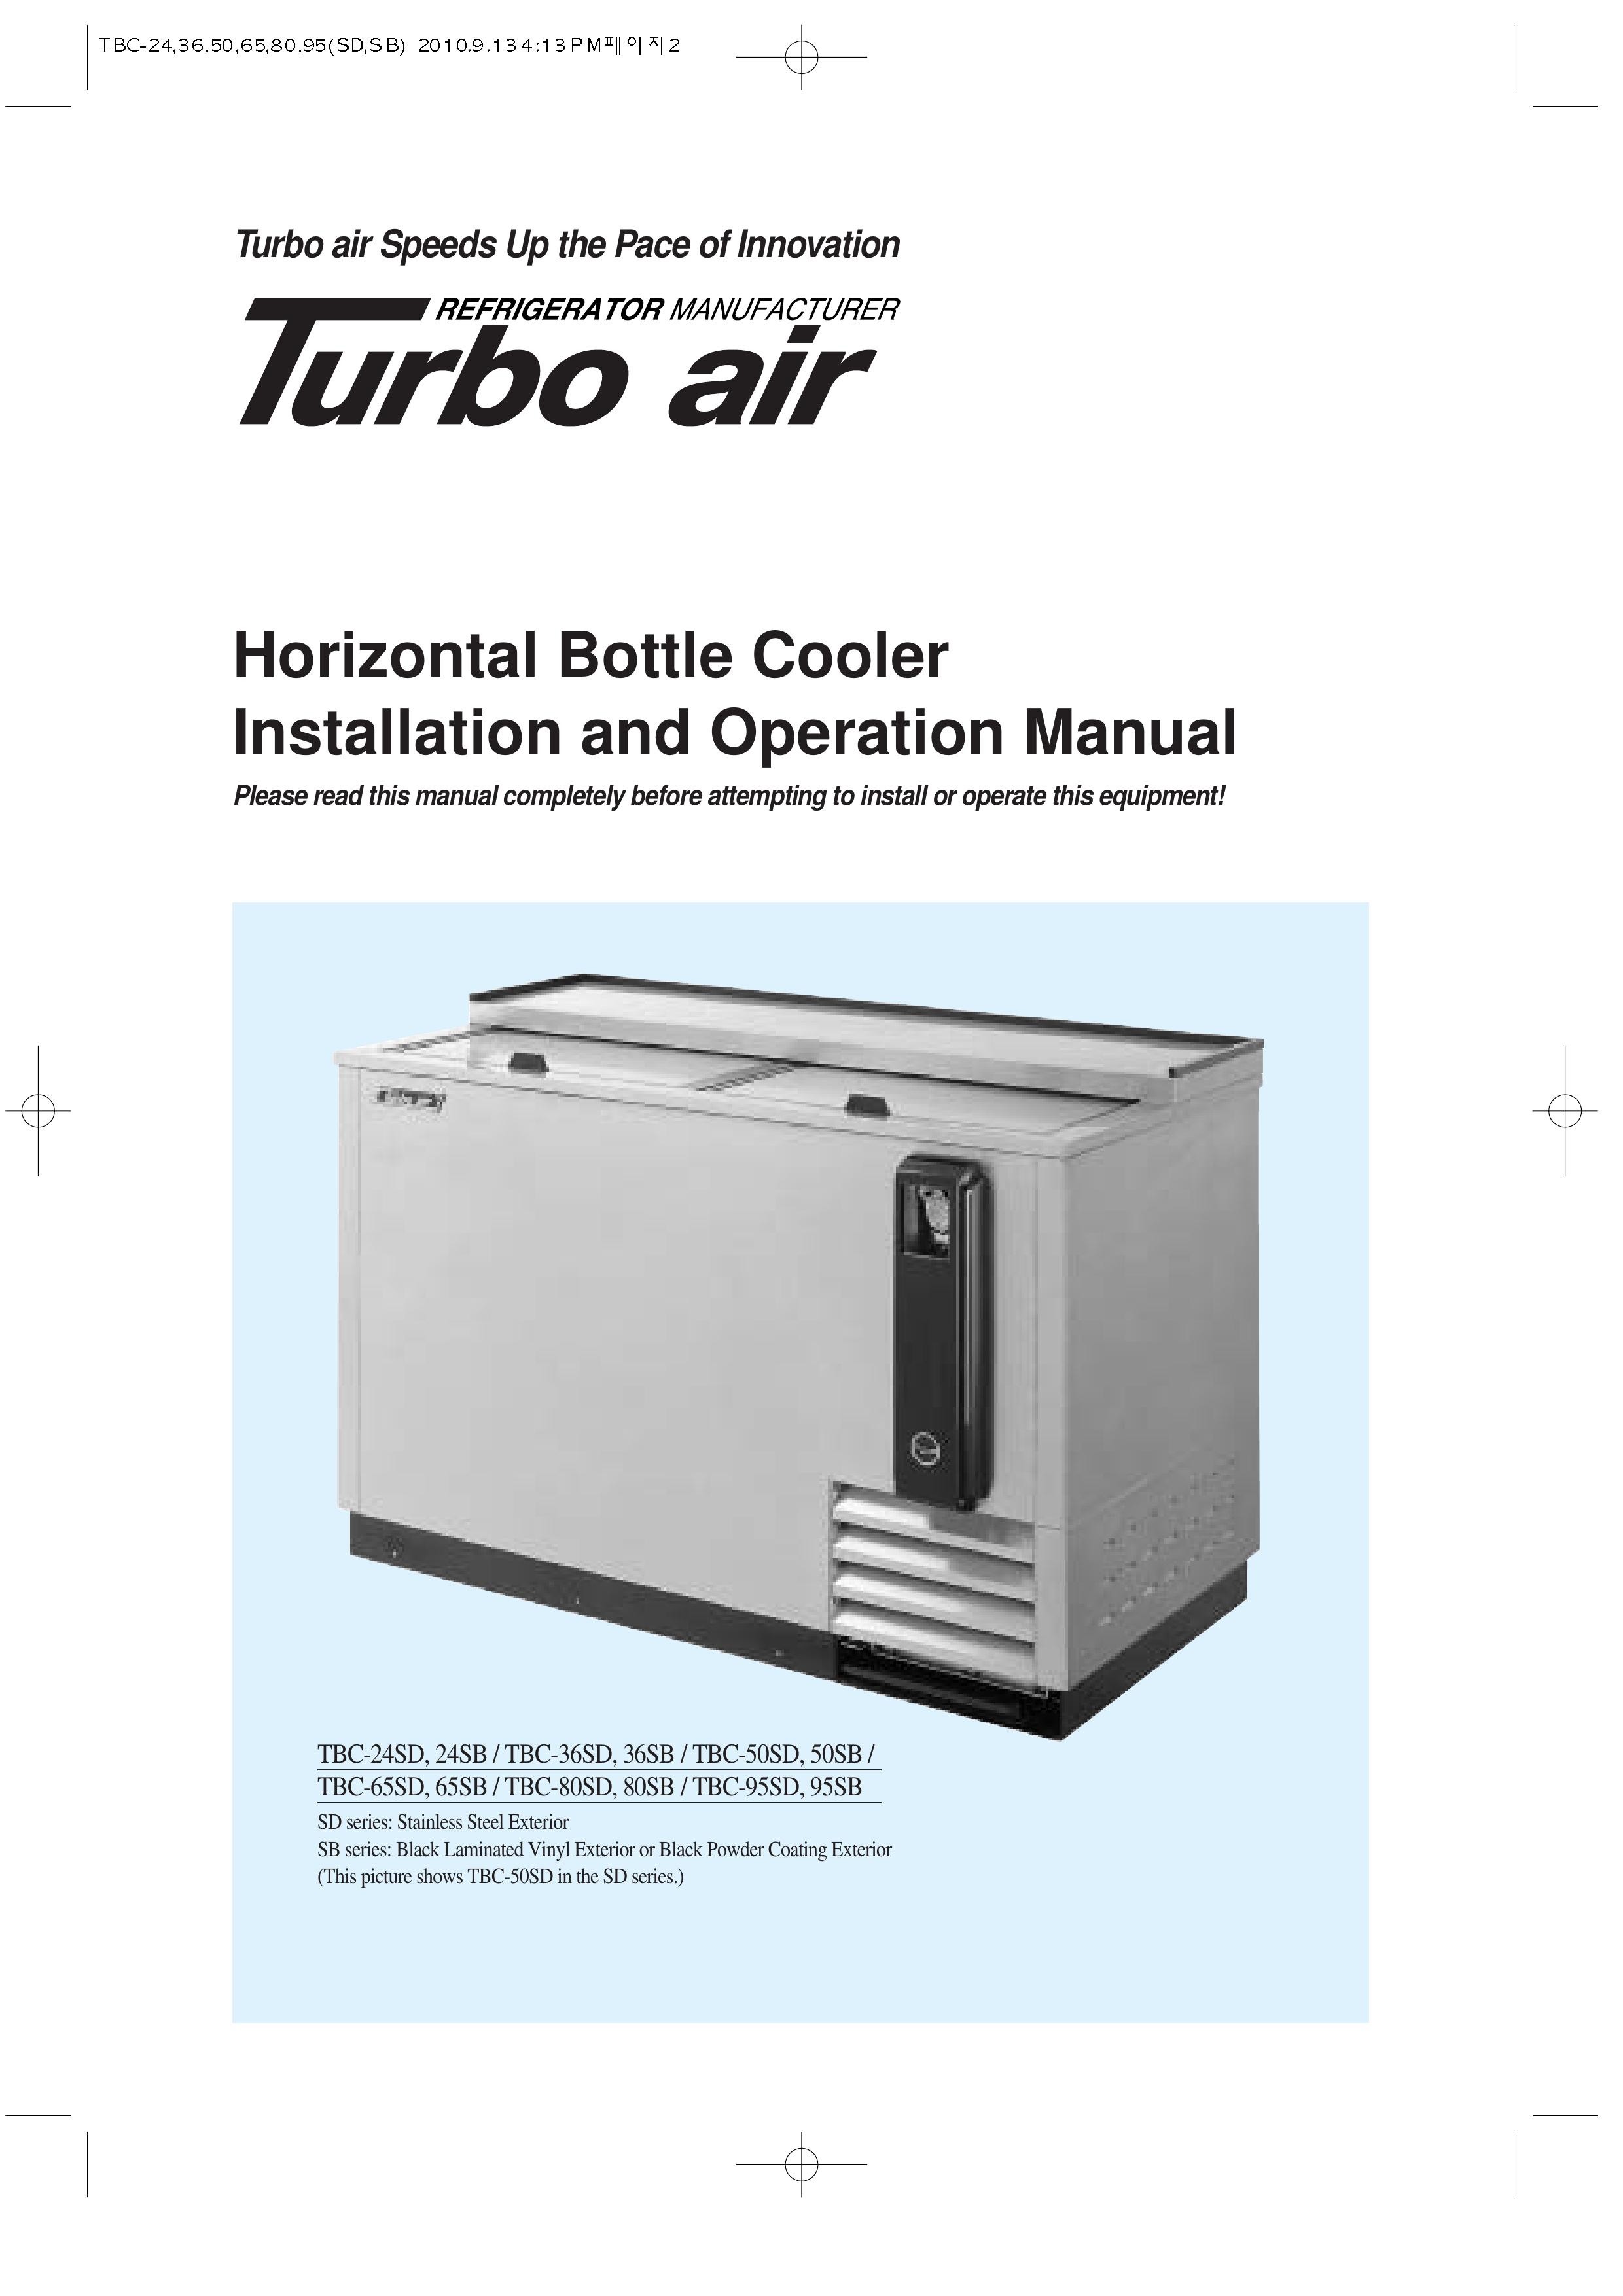 Turbo Air TBC-65SD, 65SB Refrigerator User Manual